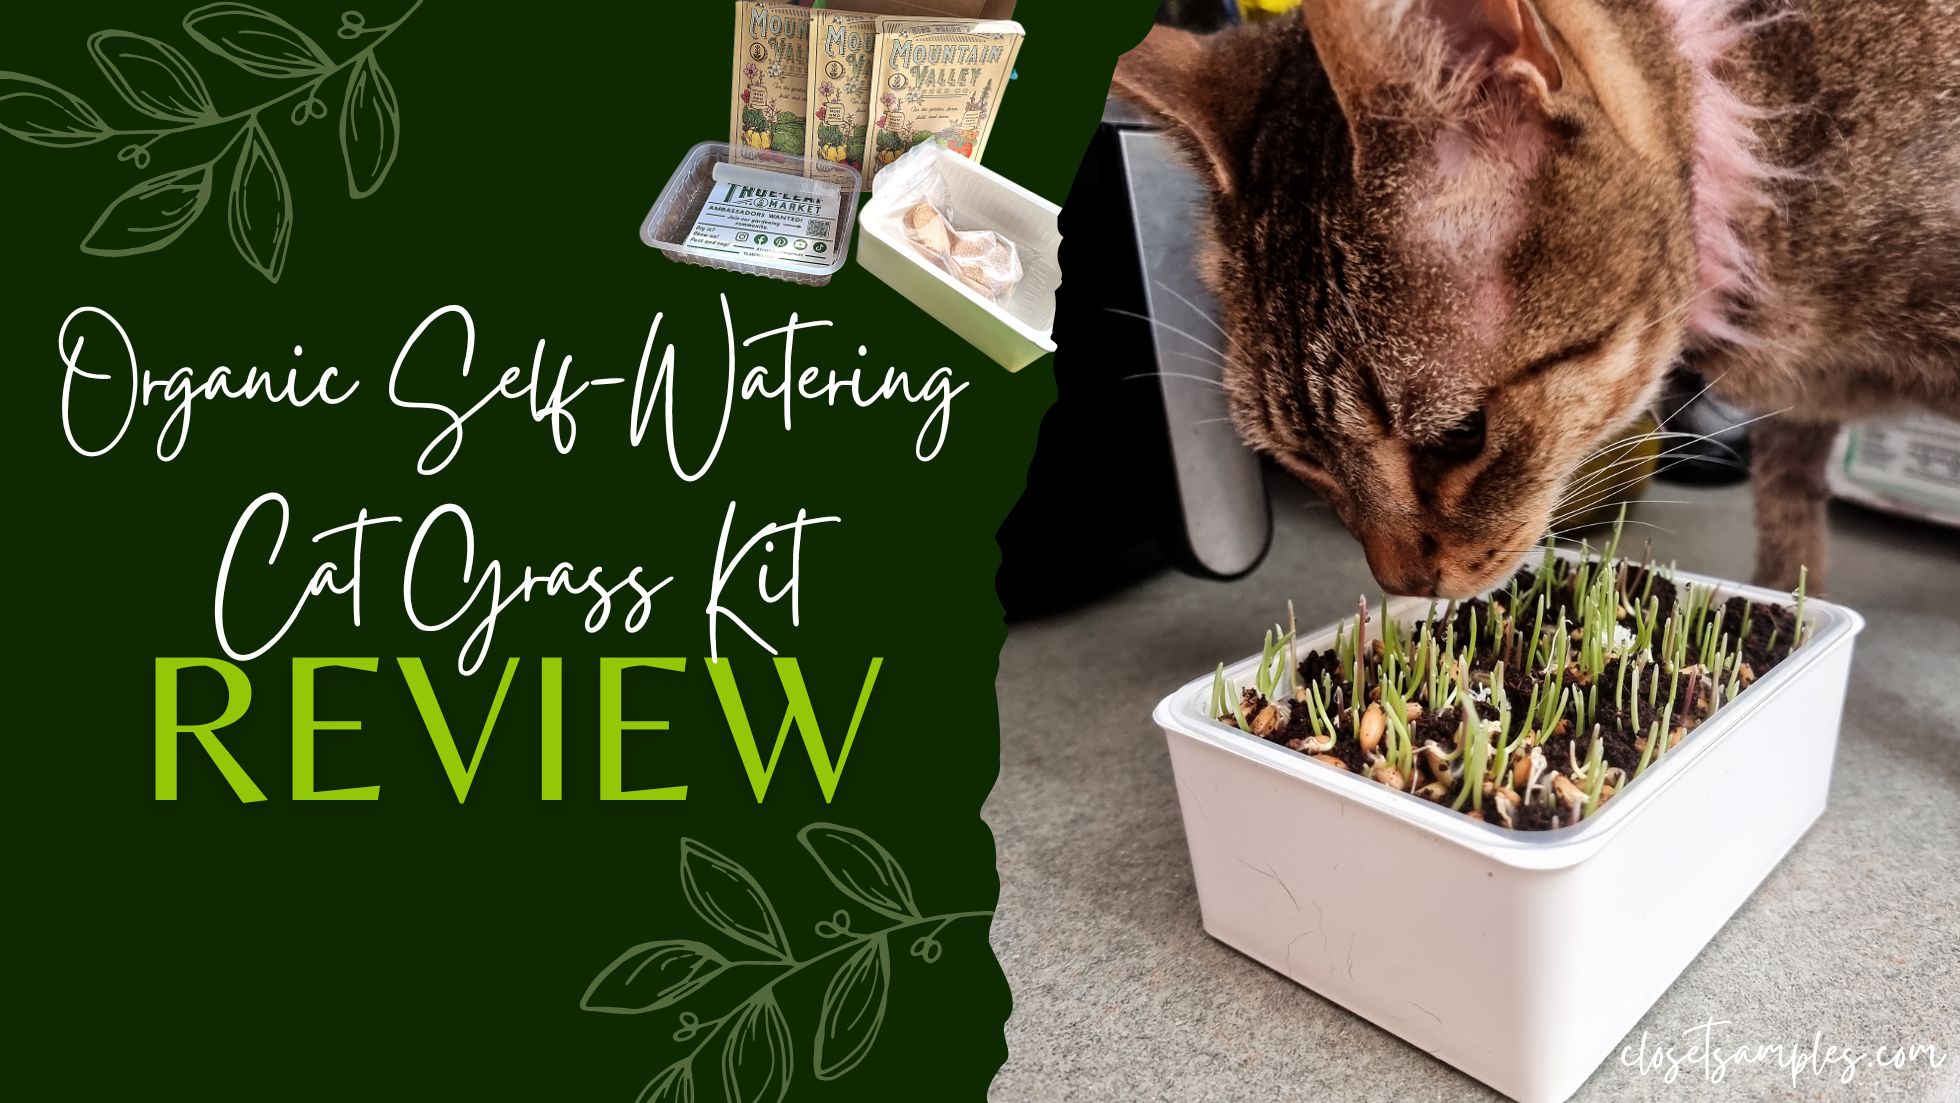 True Leaf Market Organic Self Watering Cat Grass Kit Review closetsamples